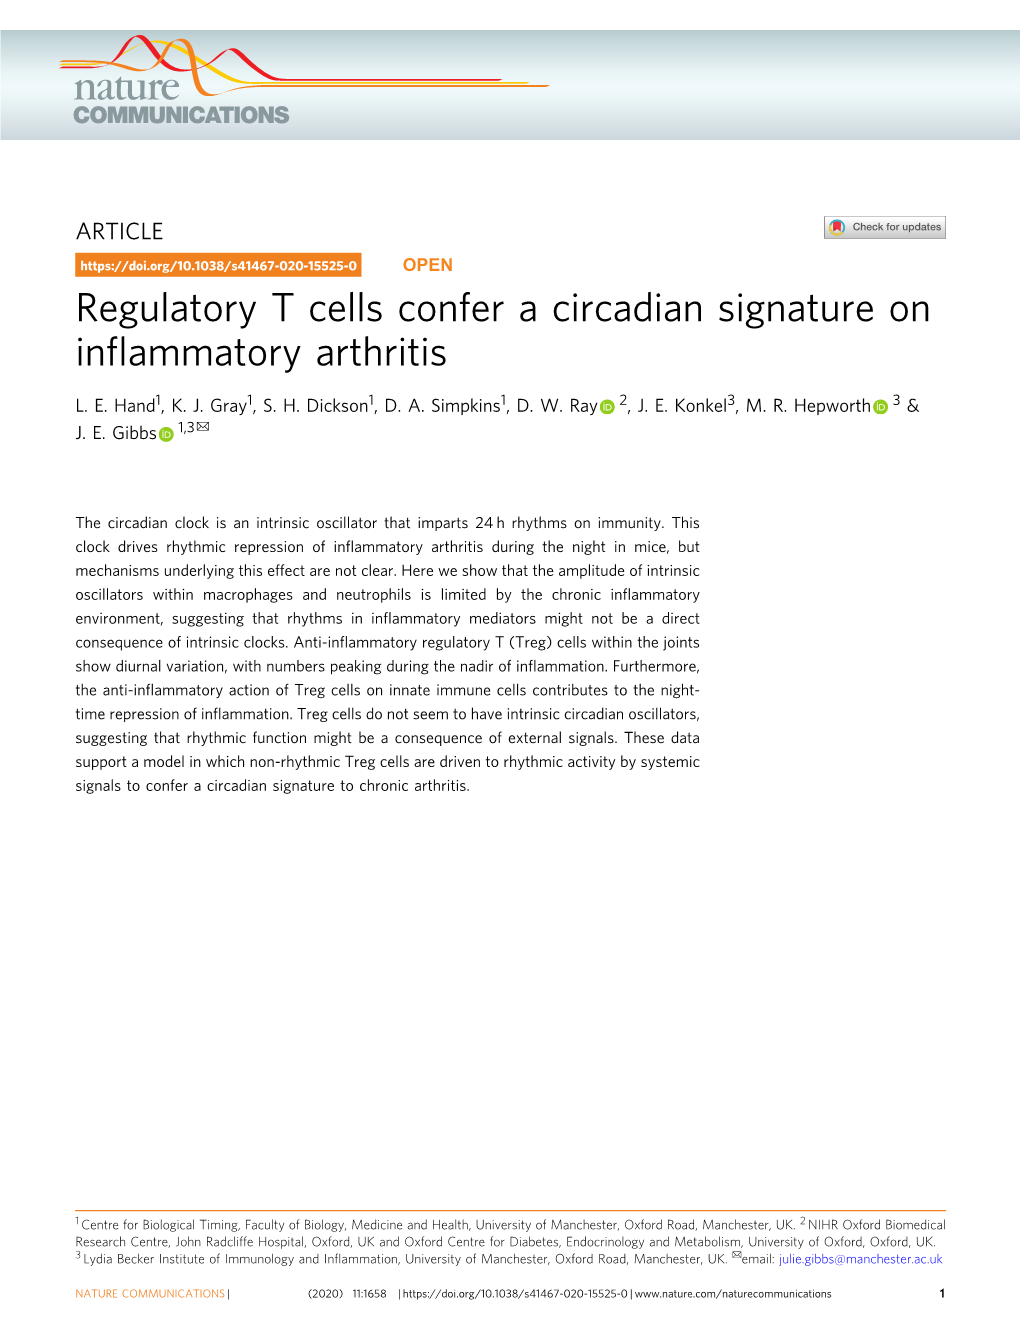 Regulatory T Cells Confer a Circadian Signature on Inflammatory Arthritis